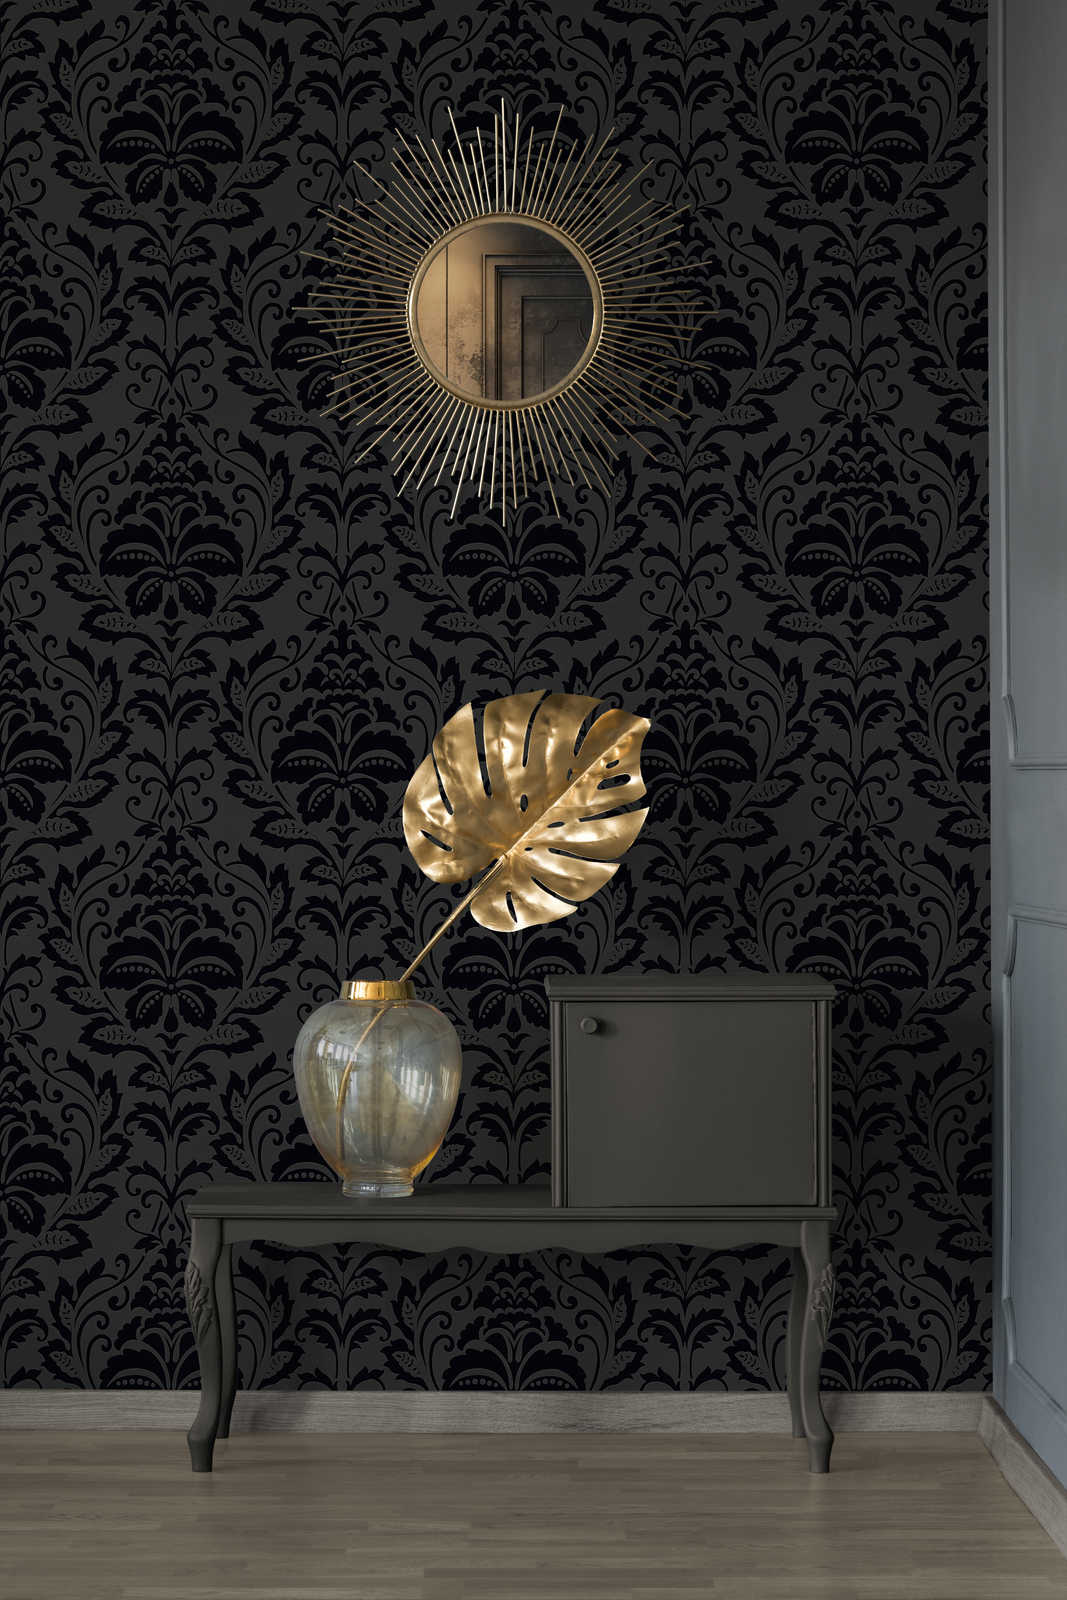             Ornament wallpaper floral design, matte / gloss contrast - black
        